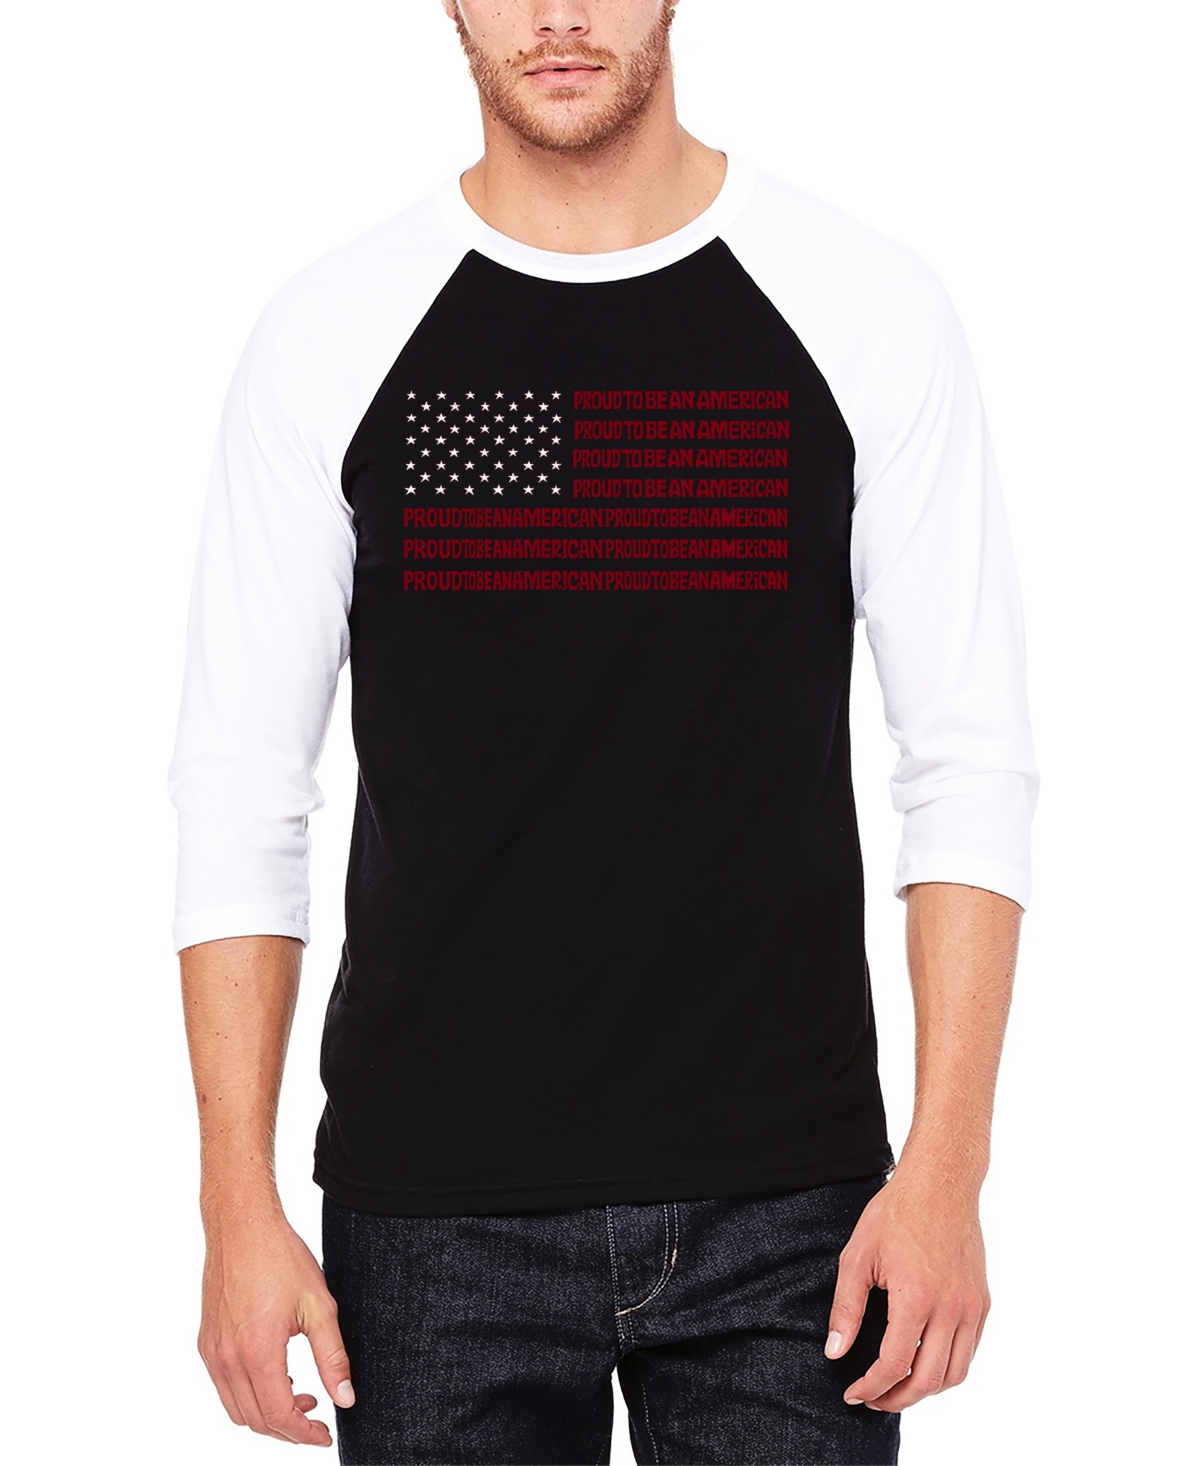 Proud To Be An American - Men's Raglan Baseball Word Art T-Shirt - Grey